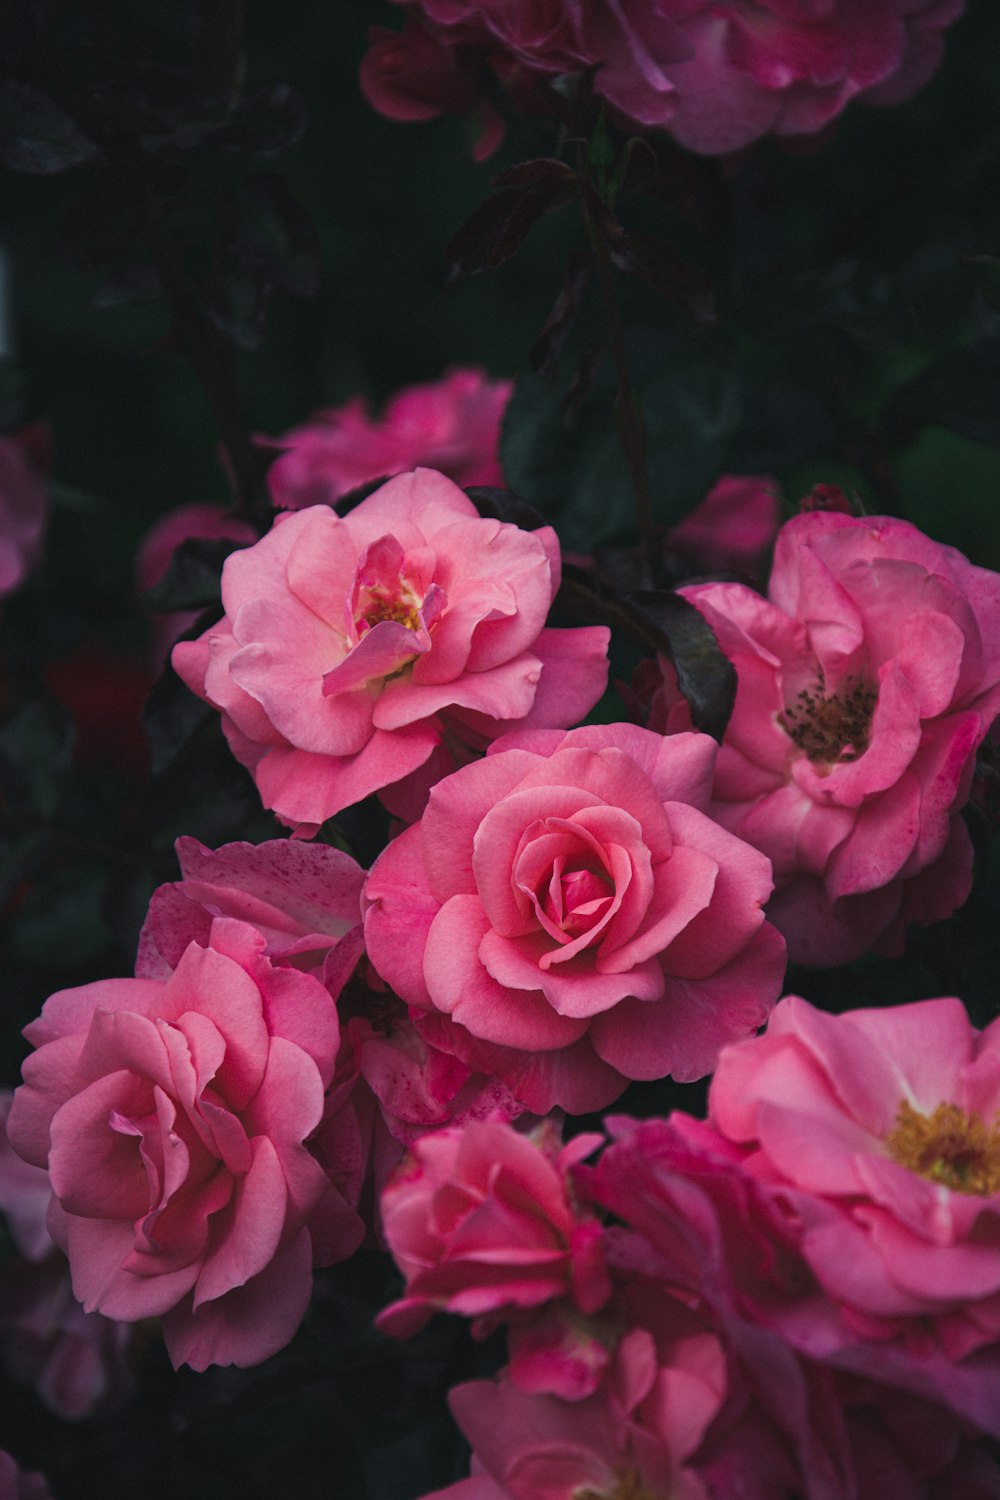 pink rose flowers